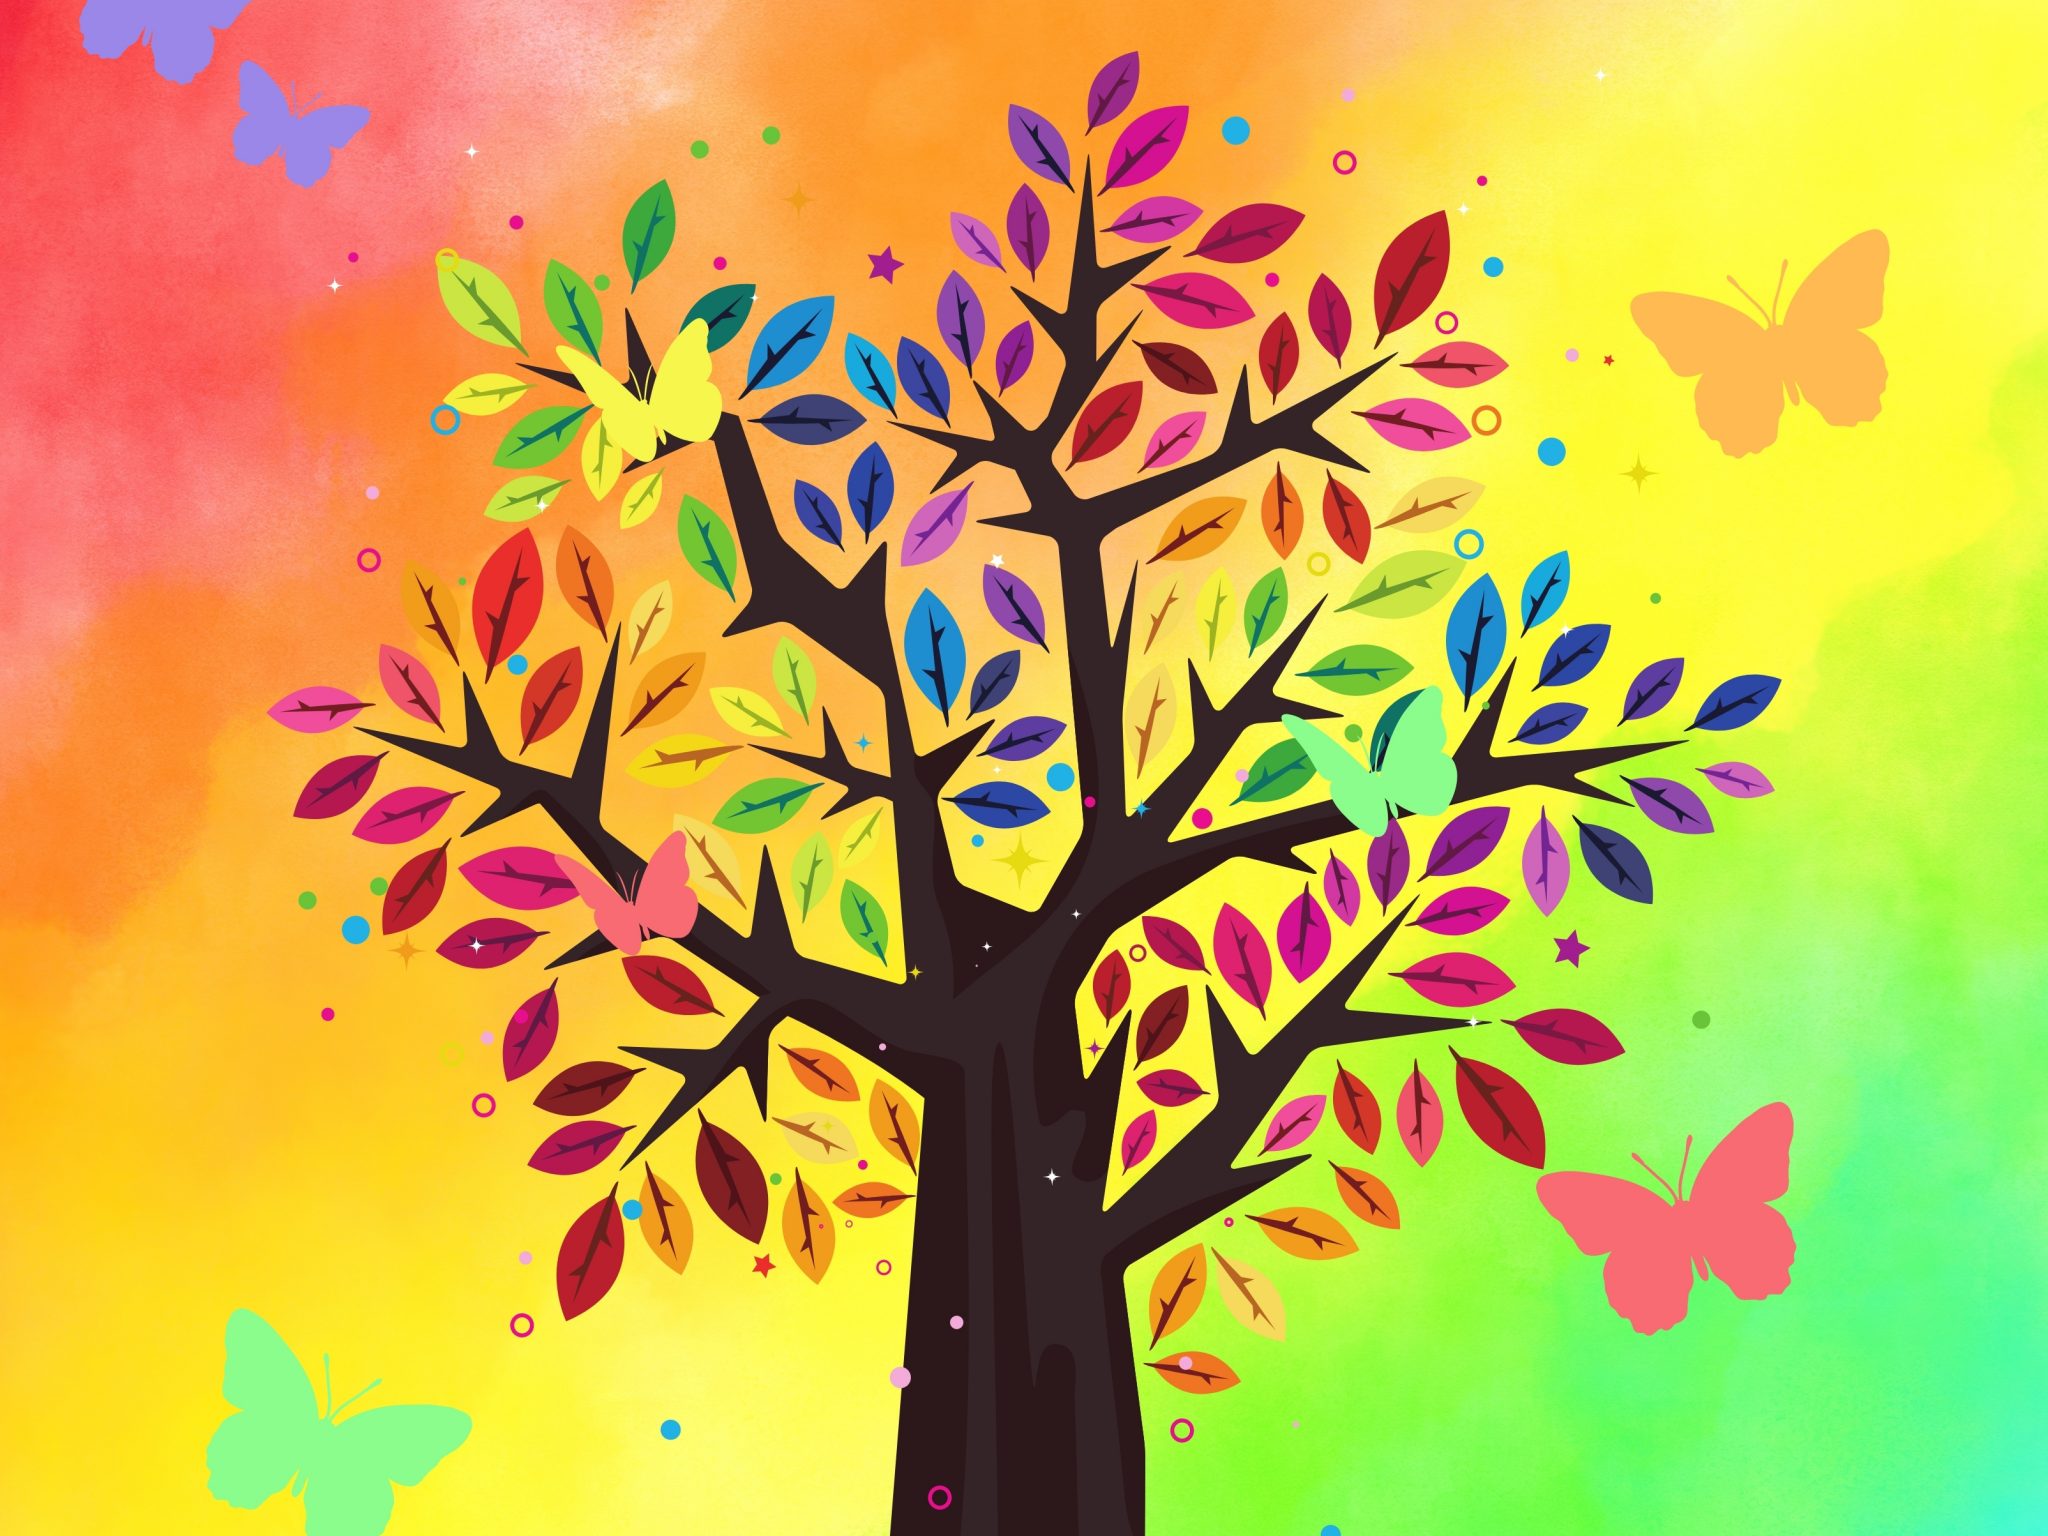 2048x1536 wallpaper Tree Rainbow Colorful Butterfly iPad Wallpaper 2048x1536 pixels resolution